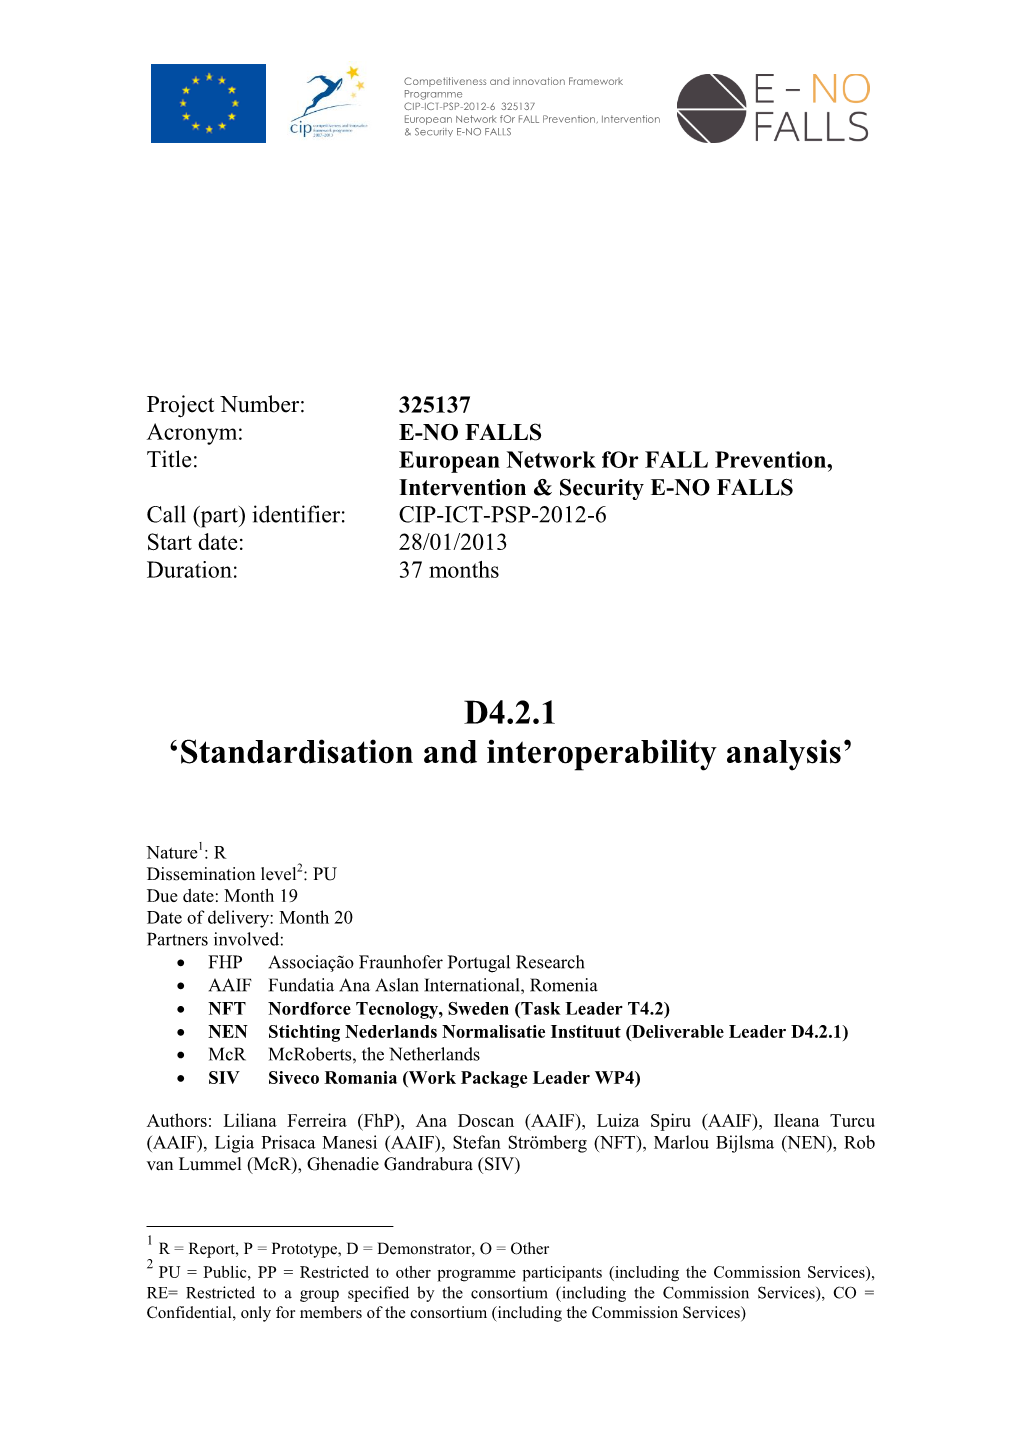 Standardisation and Interoperability Analysis’